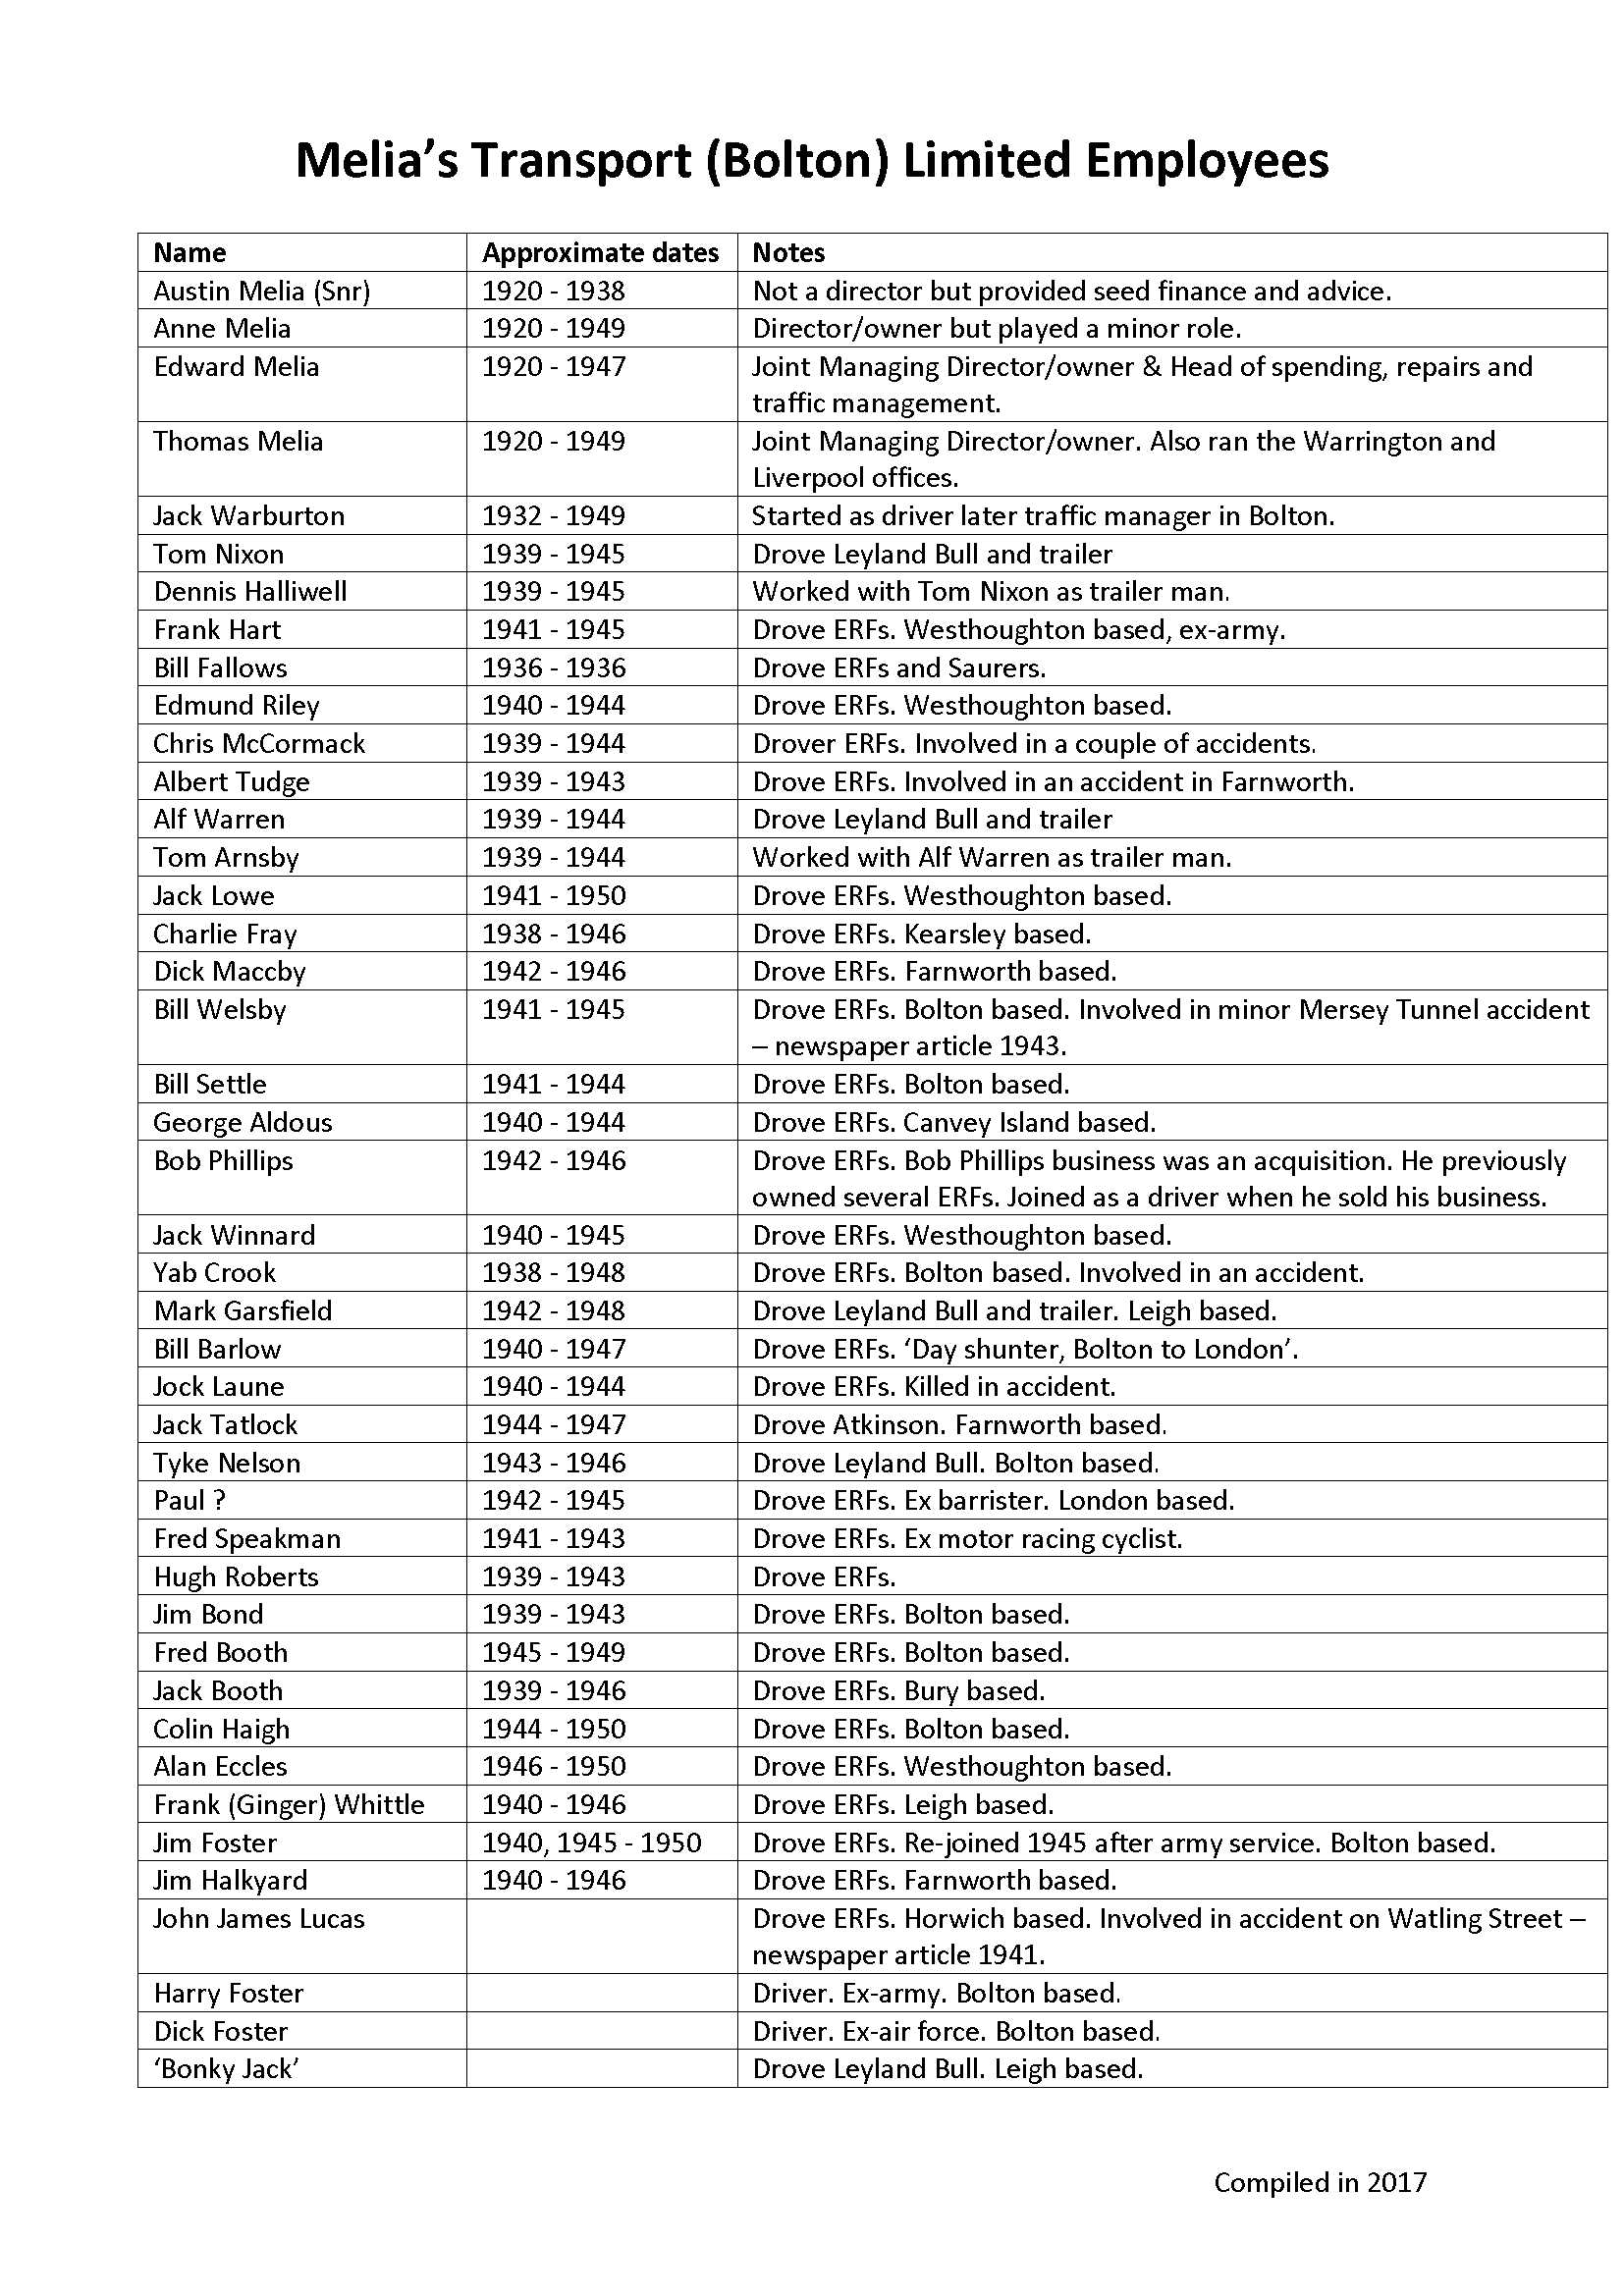 Melia's Transport (Bolton) Ltd employee List_1